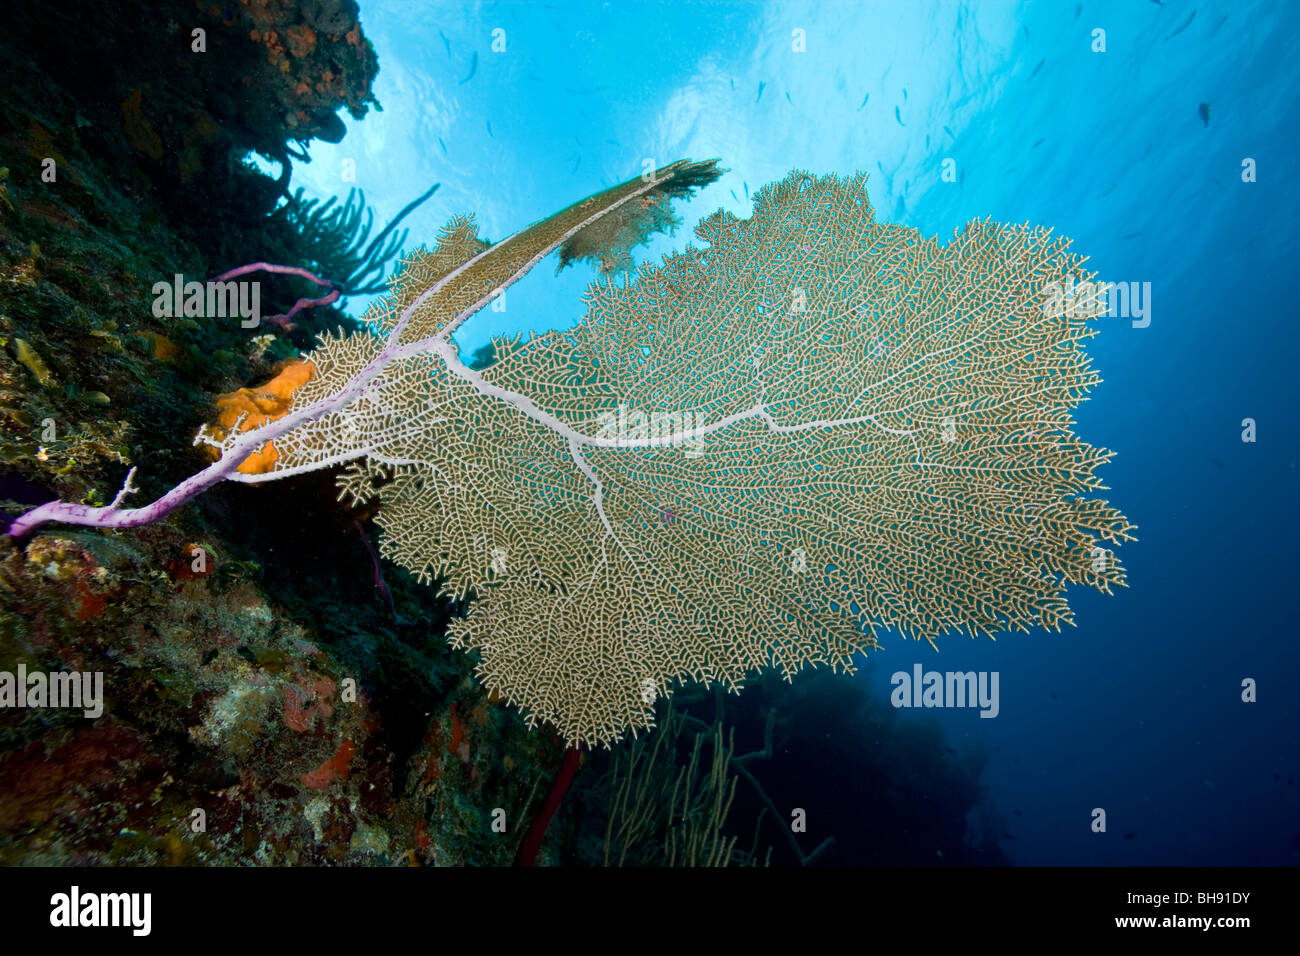 Caribbean Reef with Venus Sea Fan, Gorgonia ventalina, Santa Lucia, Caribbean Sea, Cuba Stock Photo